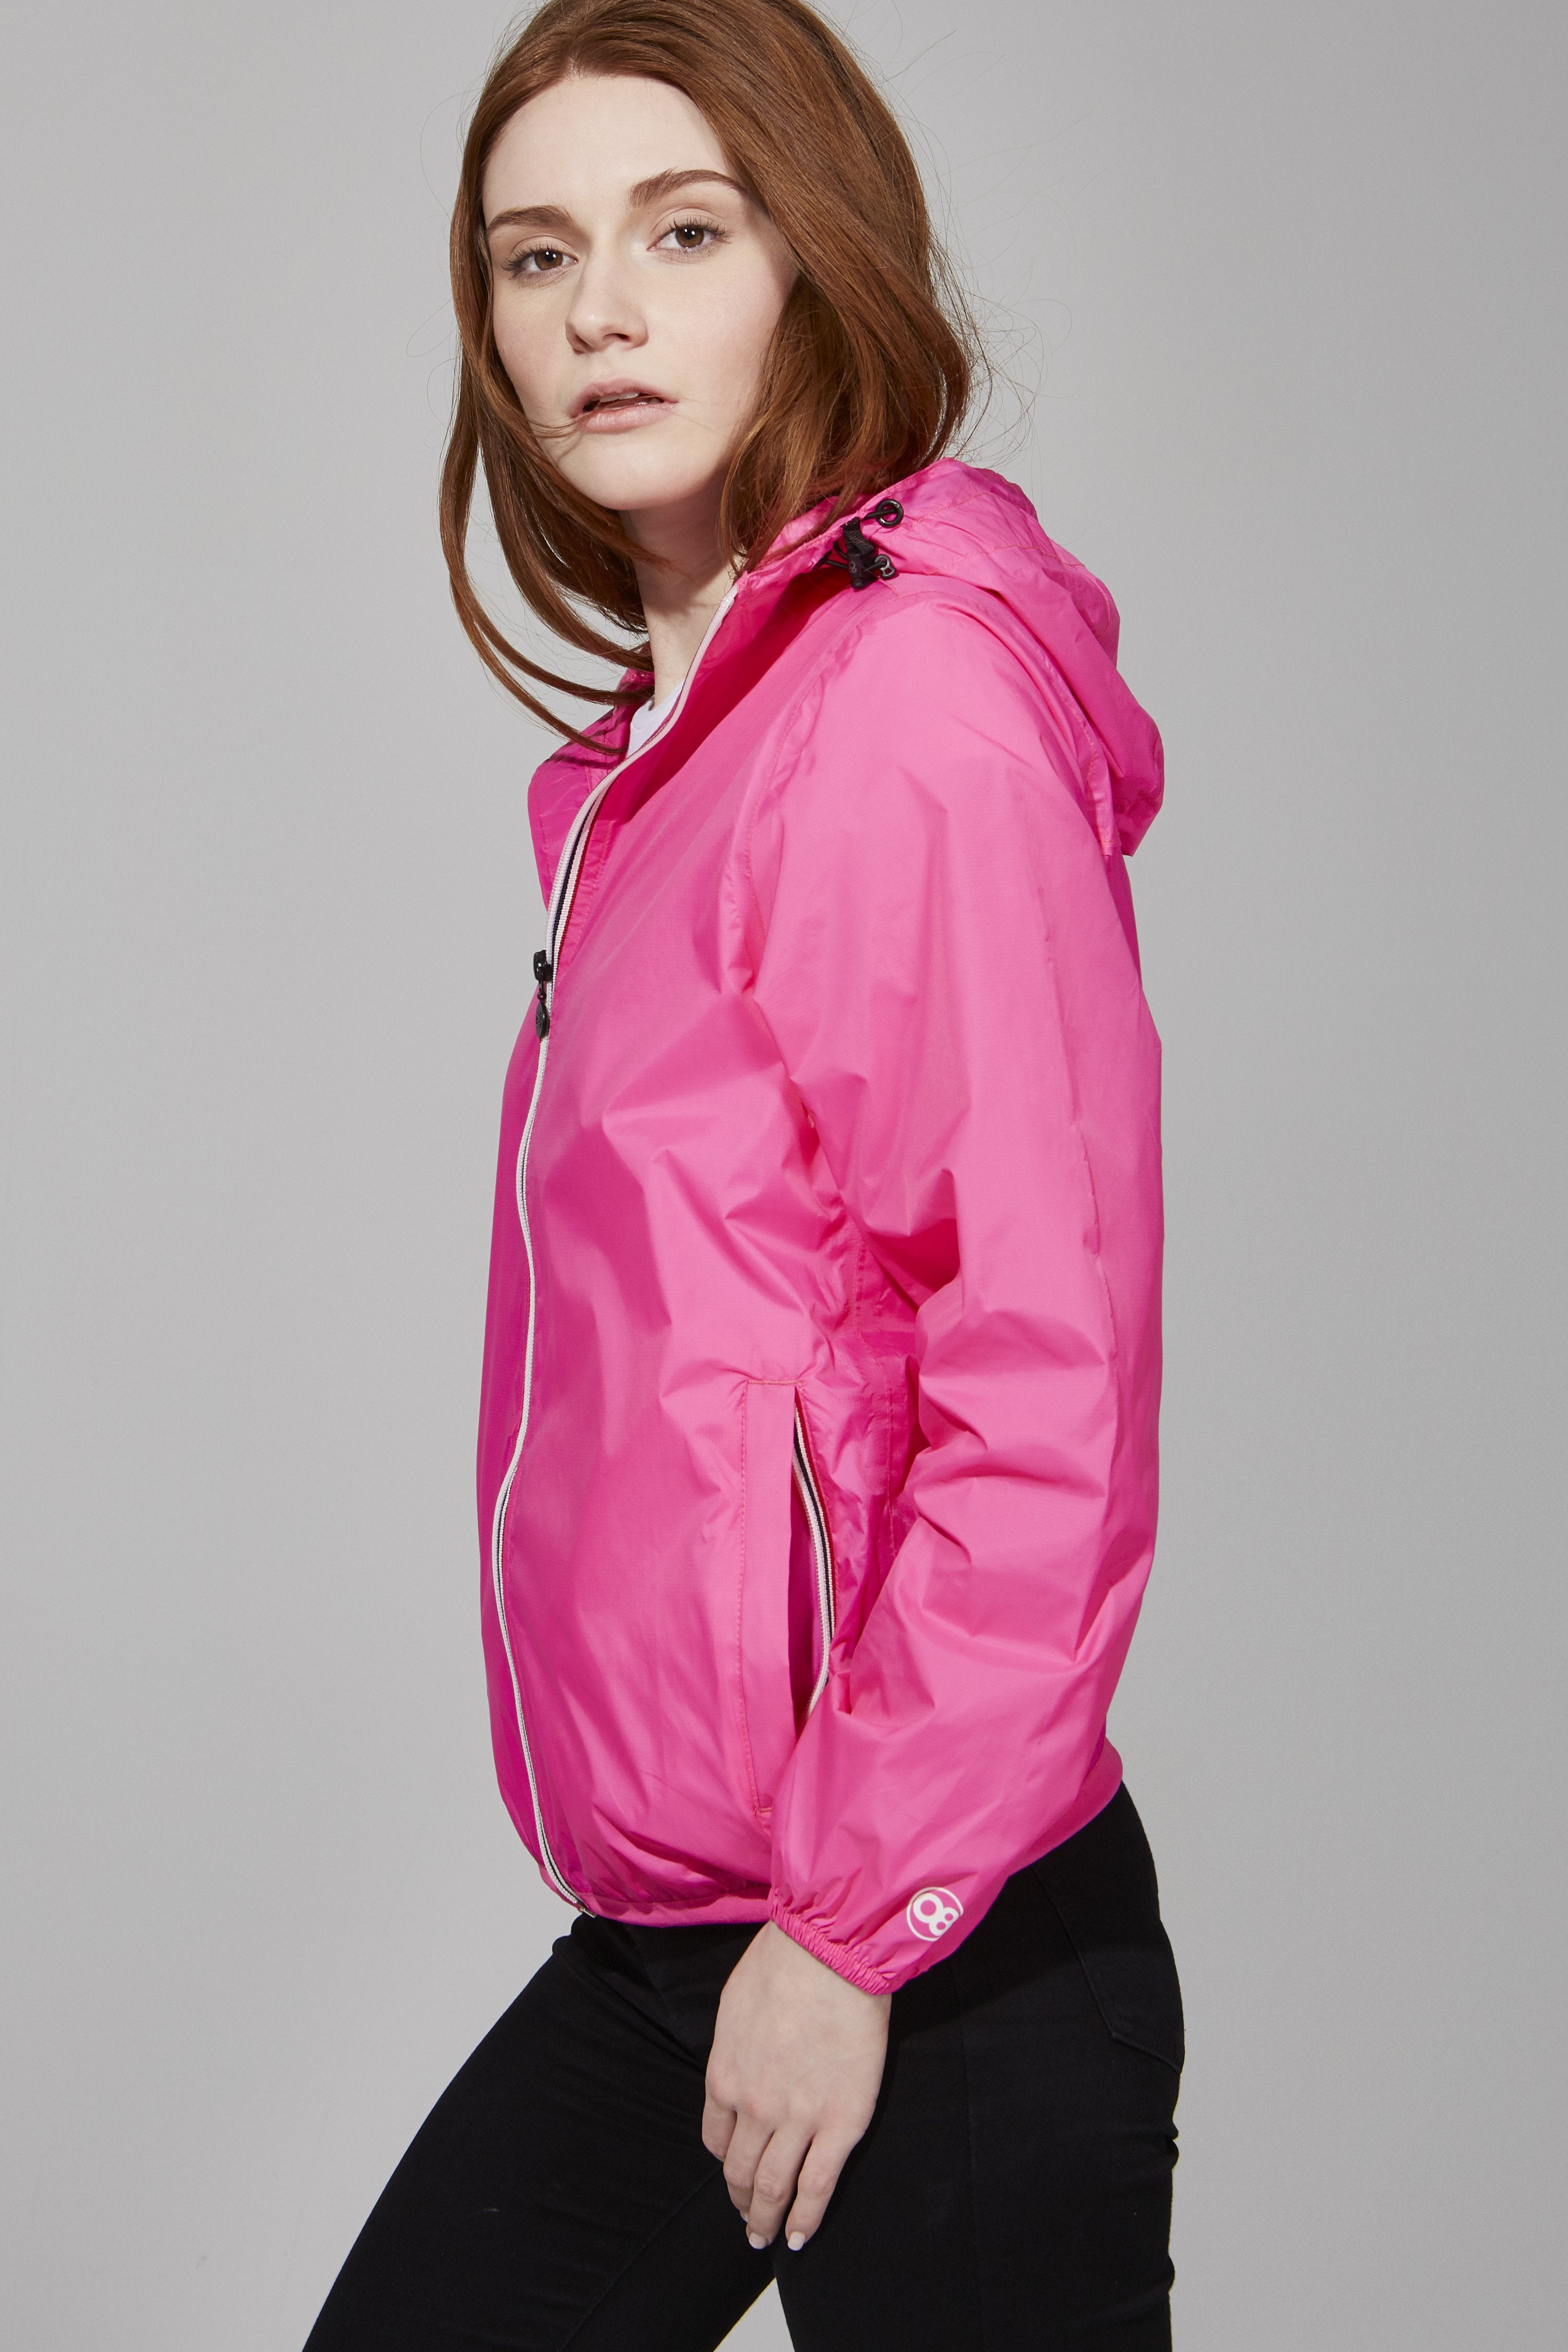 Rain jacket and windbreaker in fluorescent pink